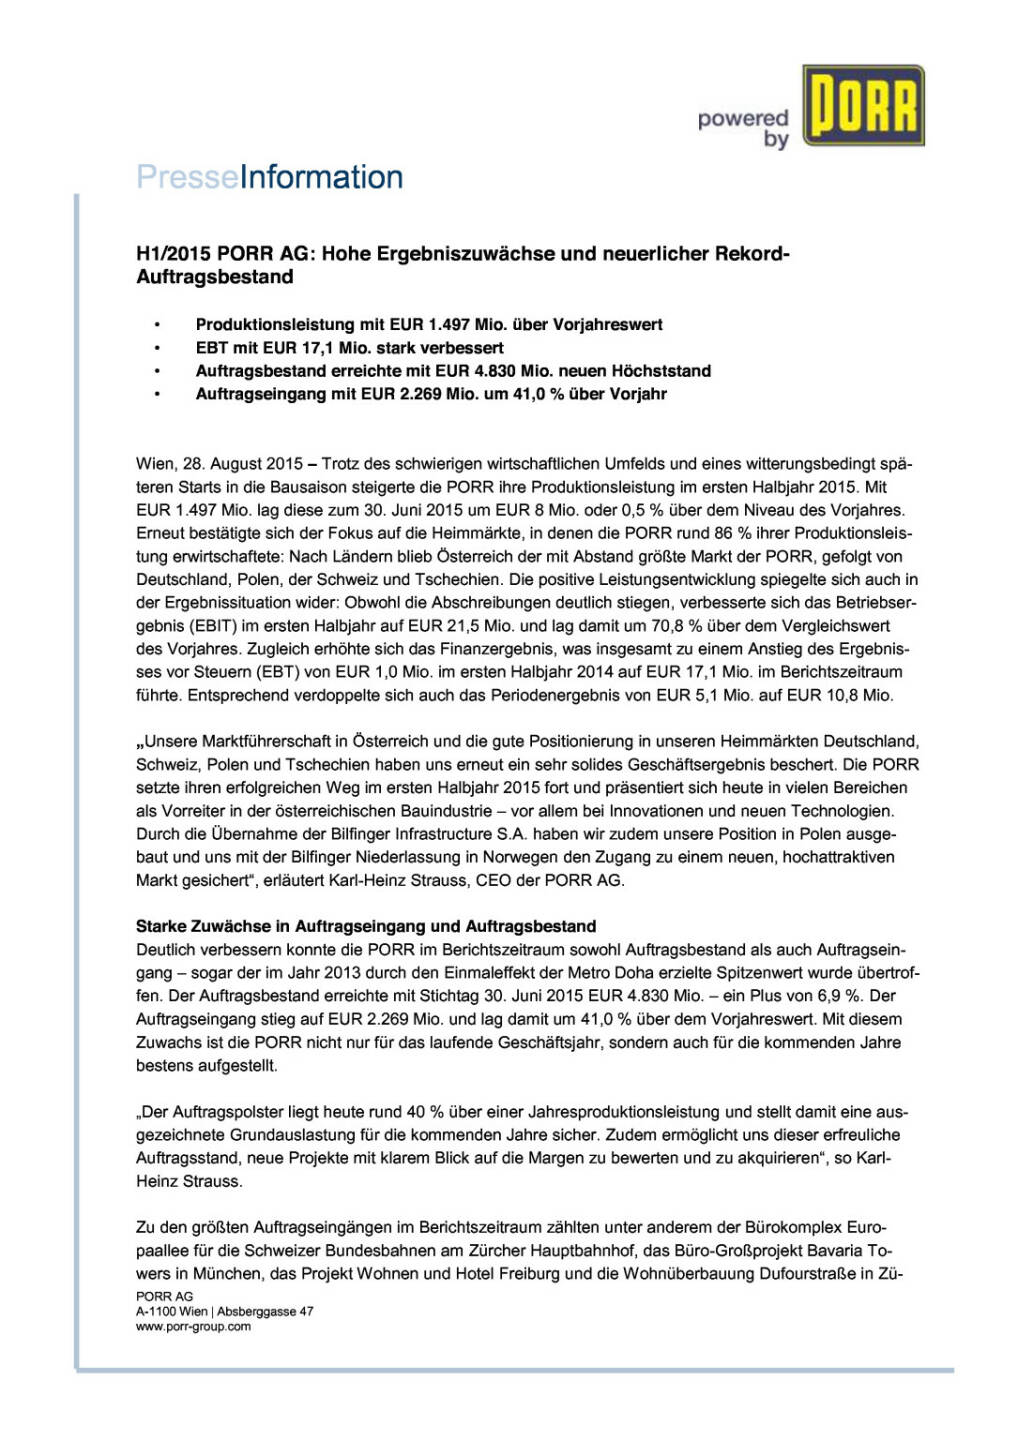 Porr AG H1/2015 , Seite 1/2, komplettes Dokument unter http://boerse-social.com/static/uploads/file_328_porr_ag_h12015.pdf